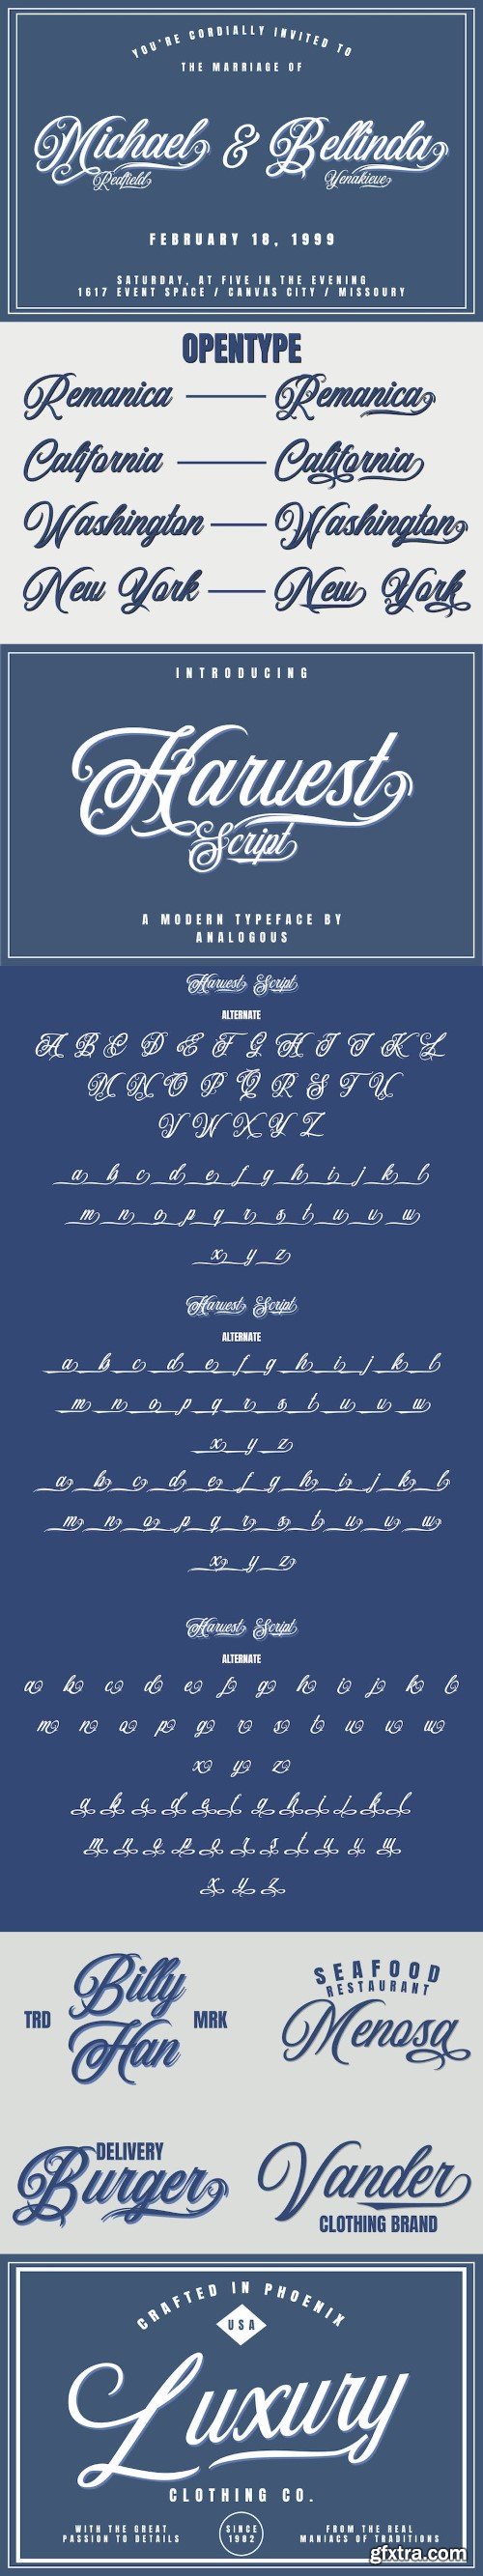 Harvest Script |Calligraphy Typeface